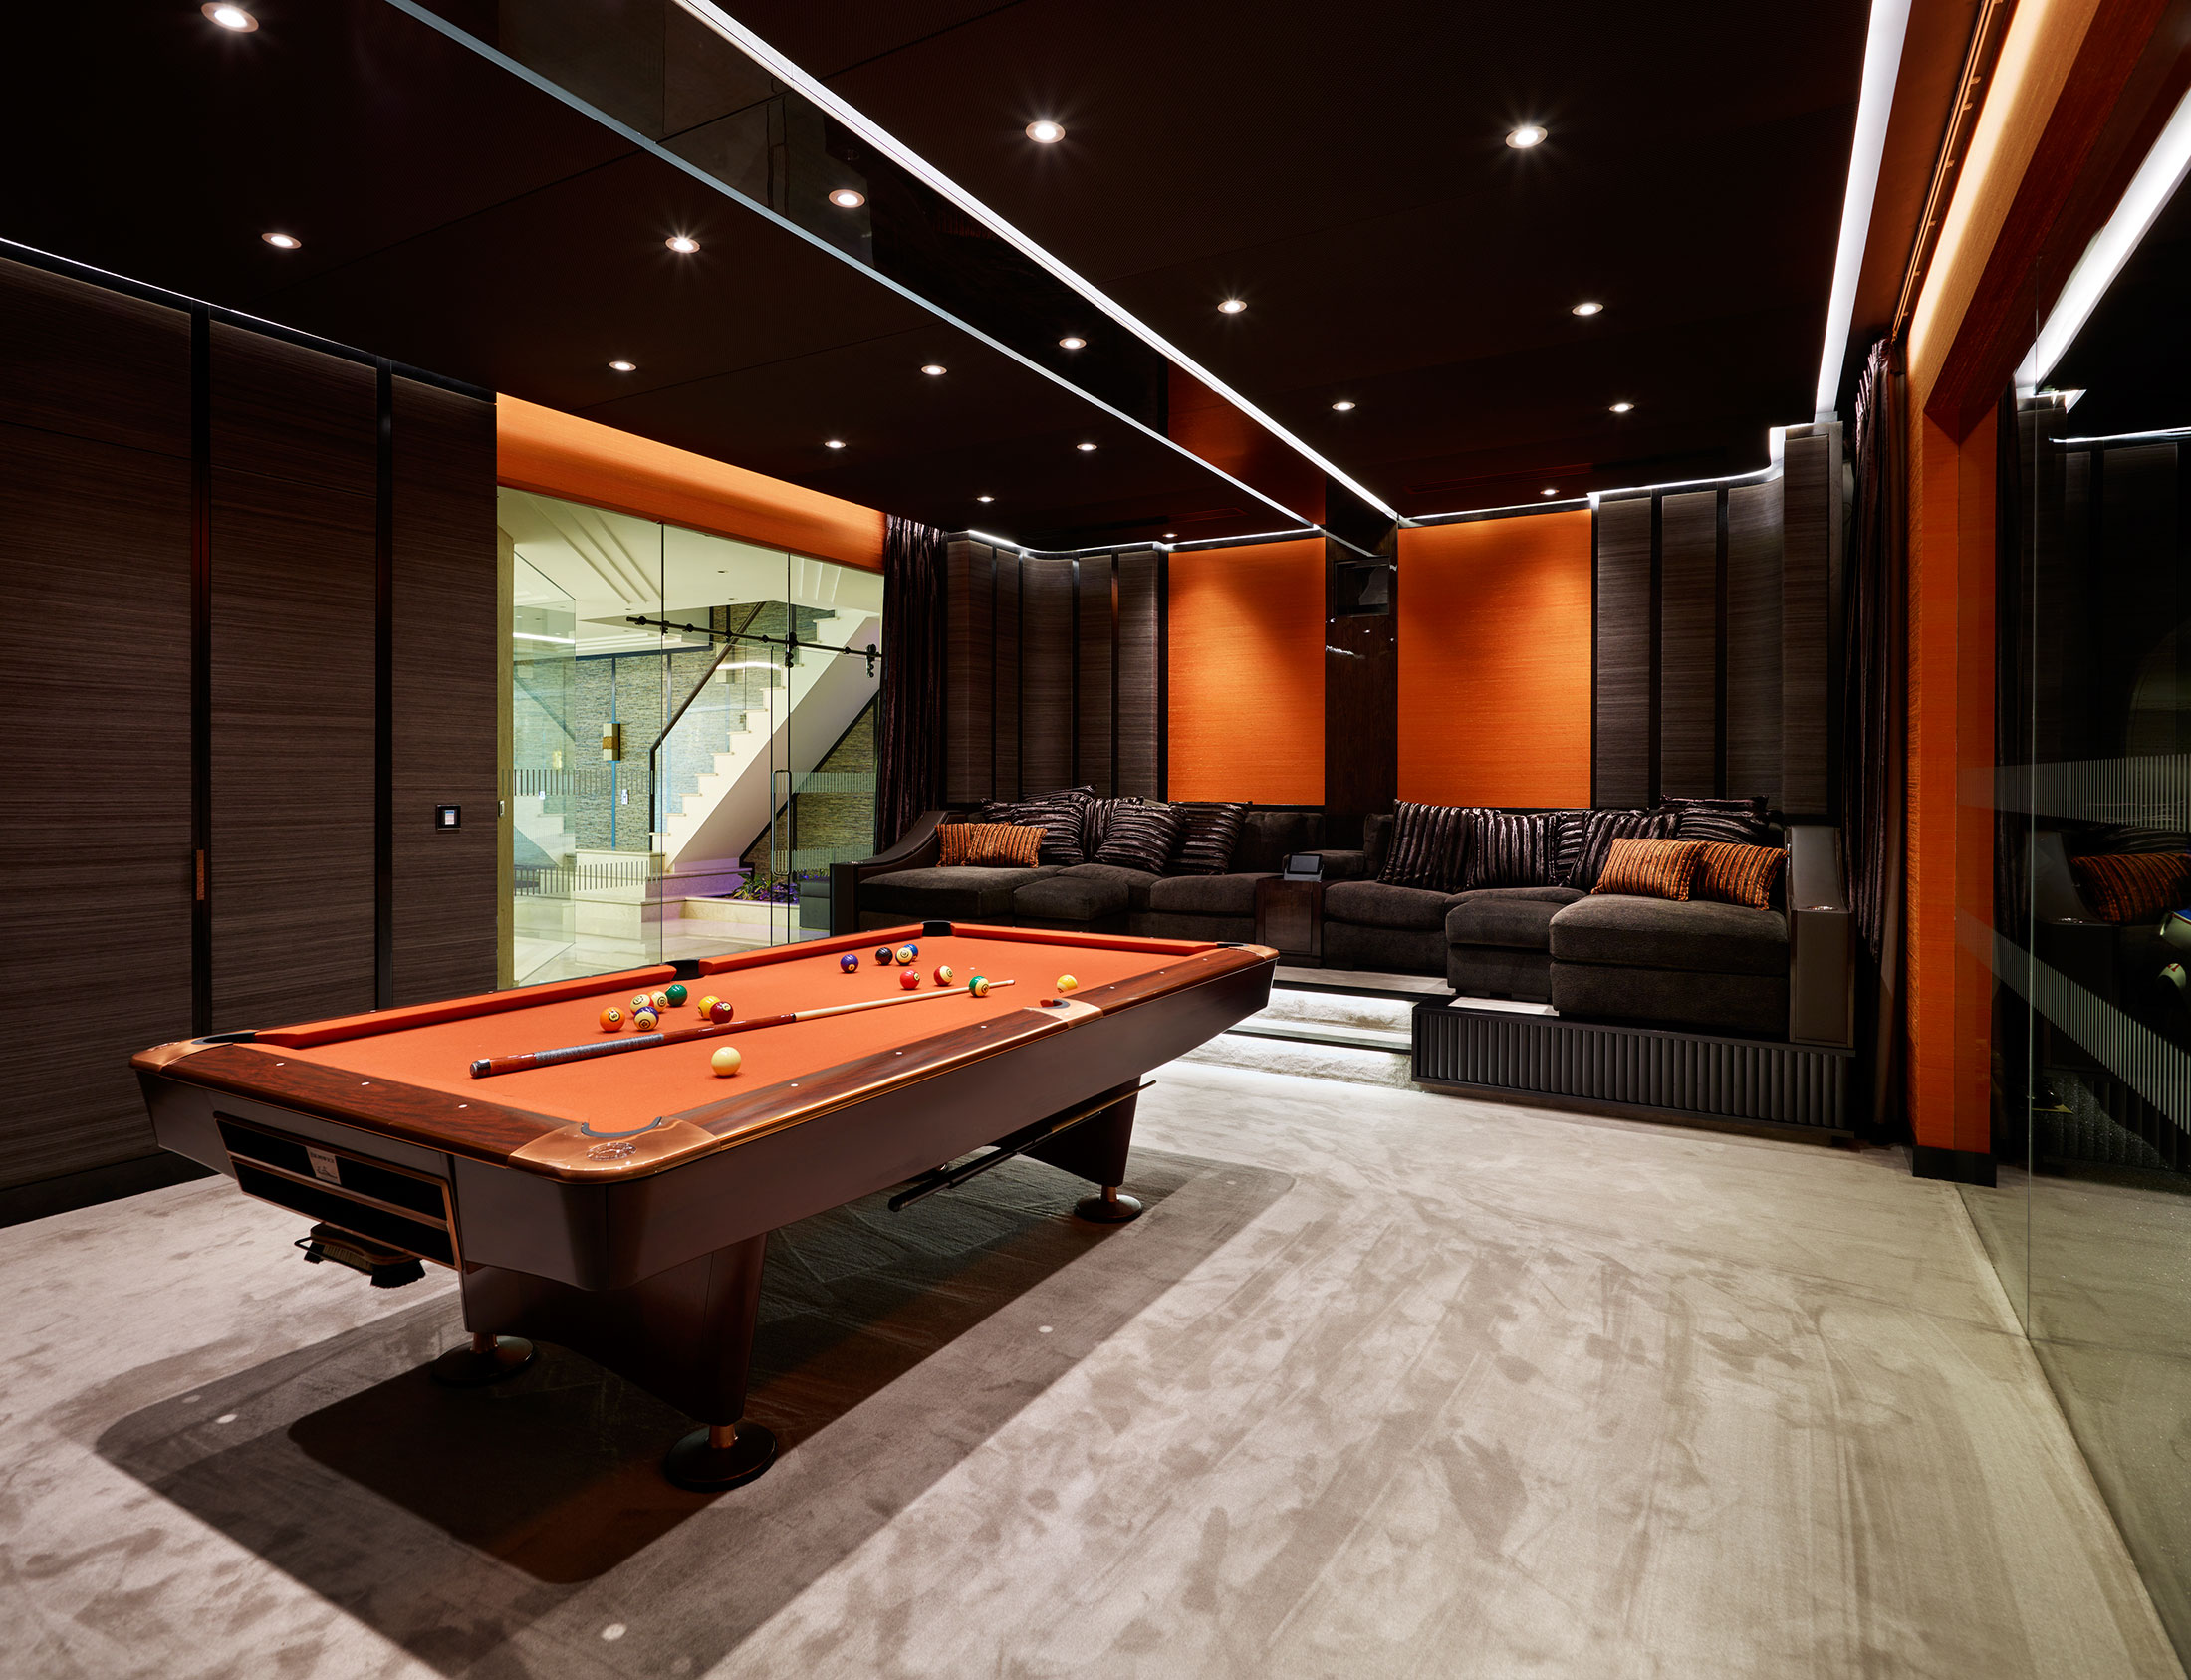 luxury interior design london residence cinema and pool room